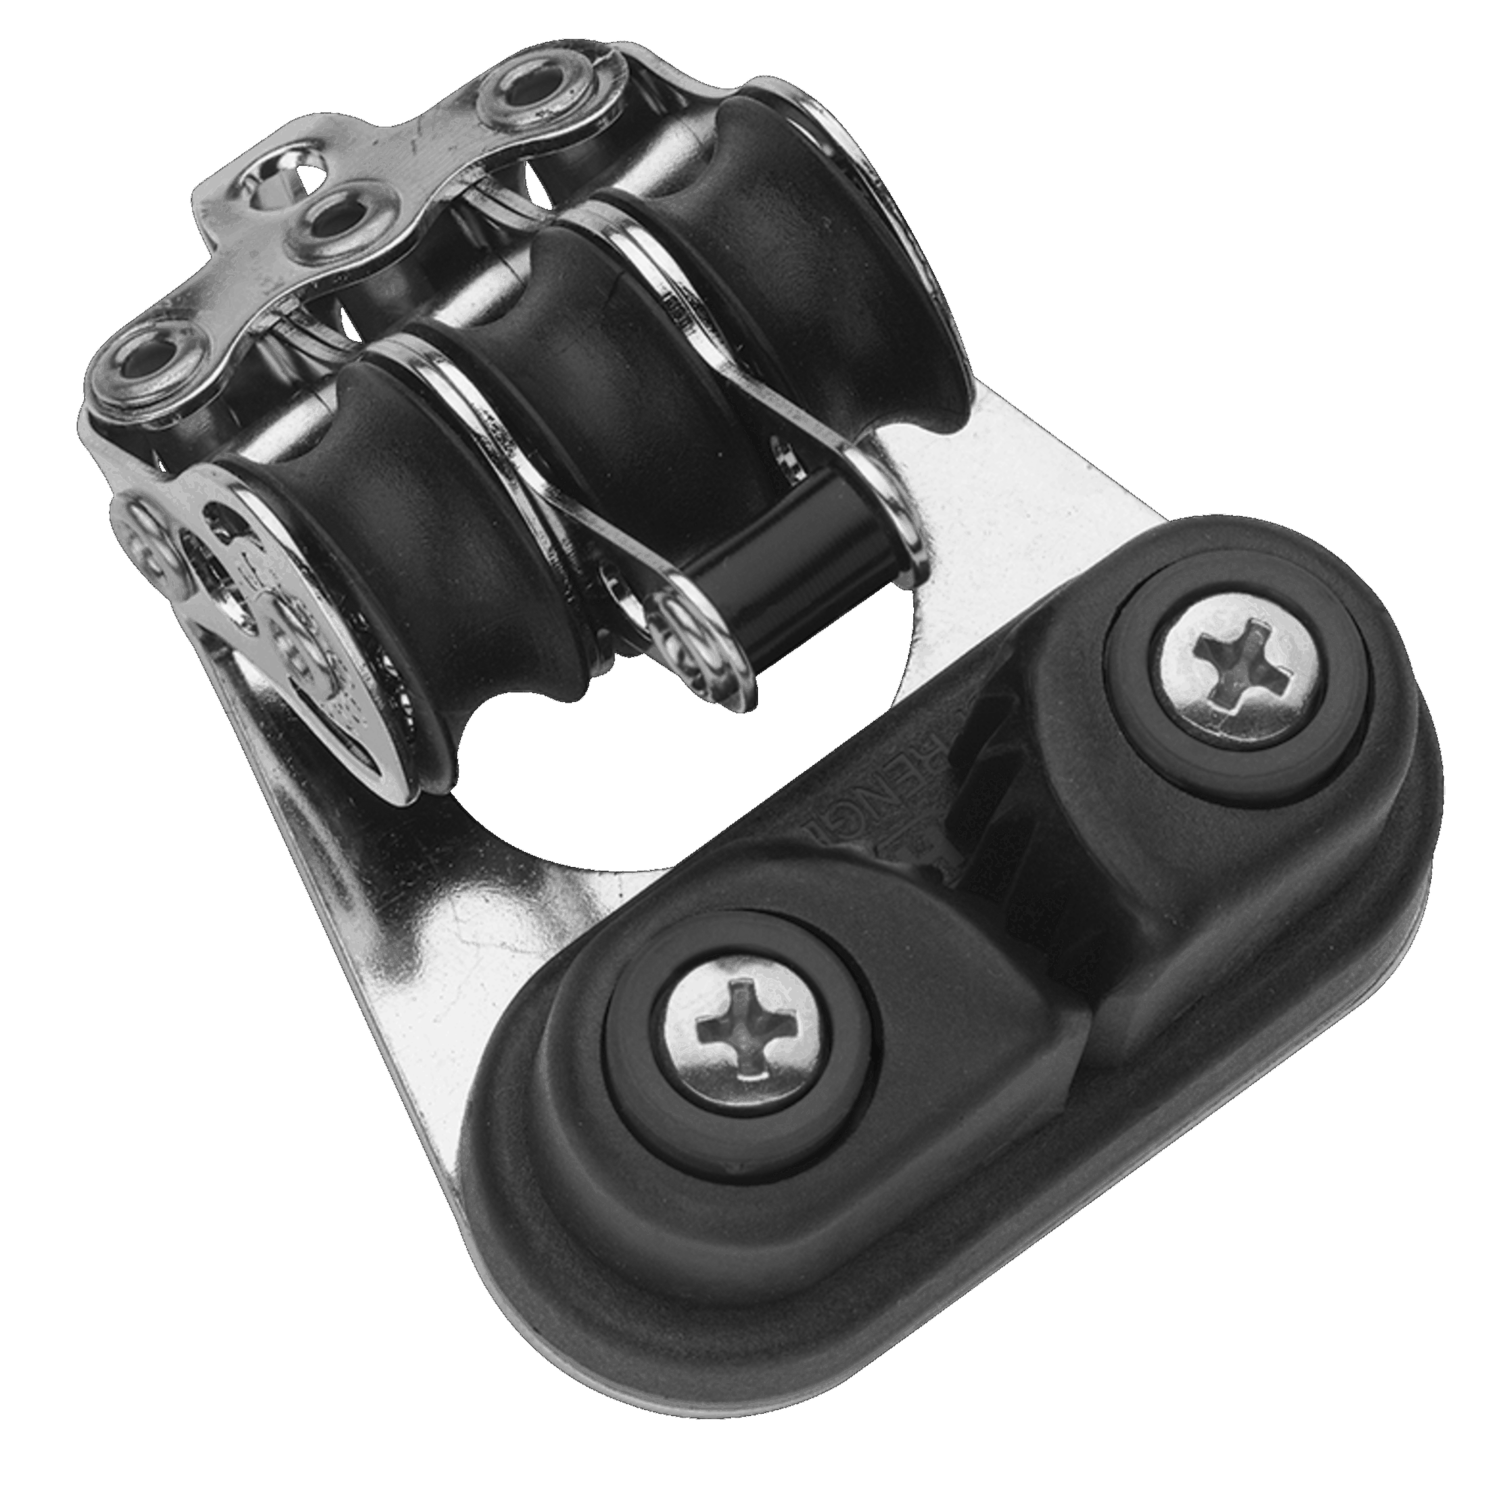 Micro XS Block Kugellager 6 mm - 3 Rollen, Hundsfott, Schotklemme, Bügel | 3532760055.png | 1700897635